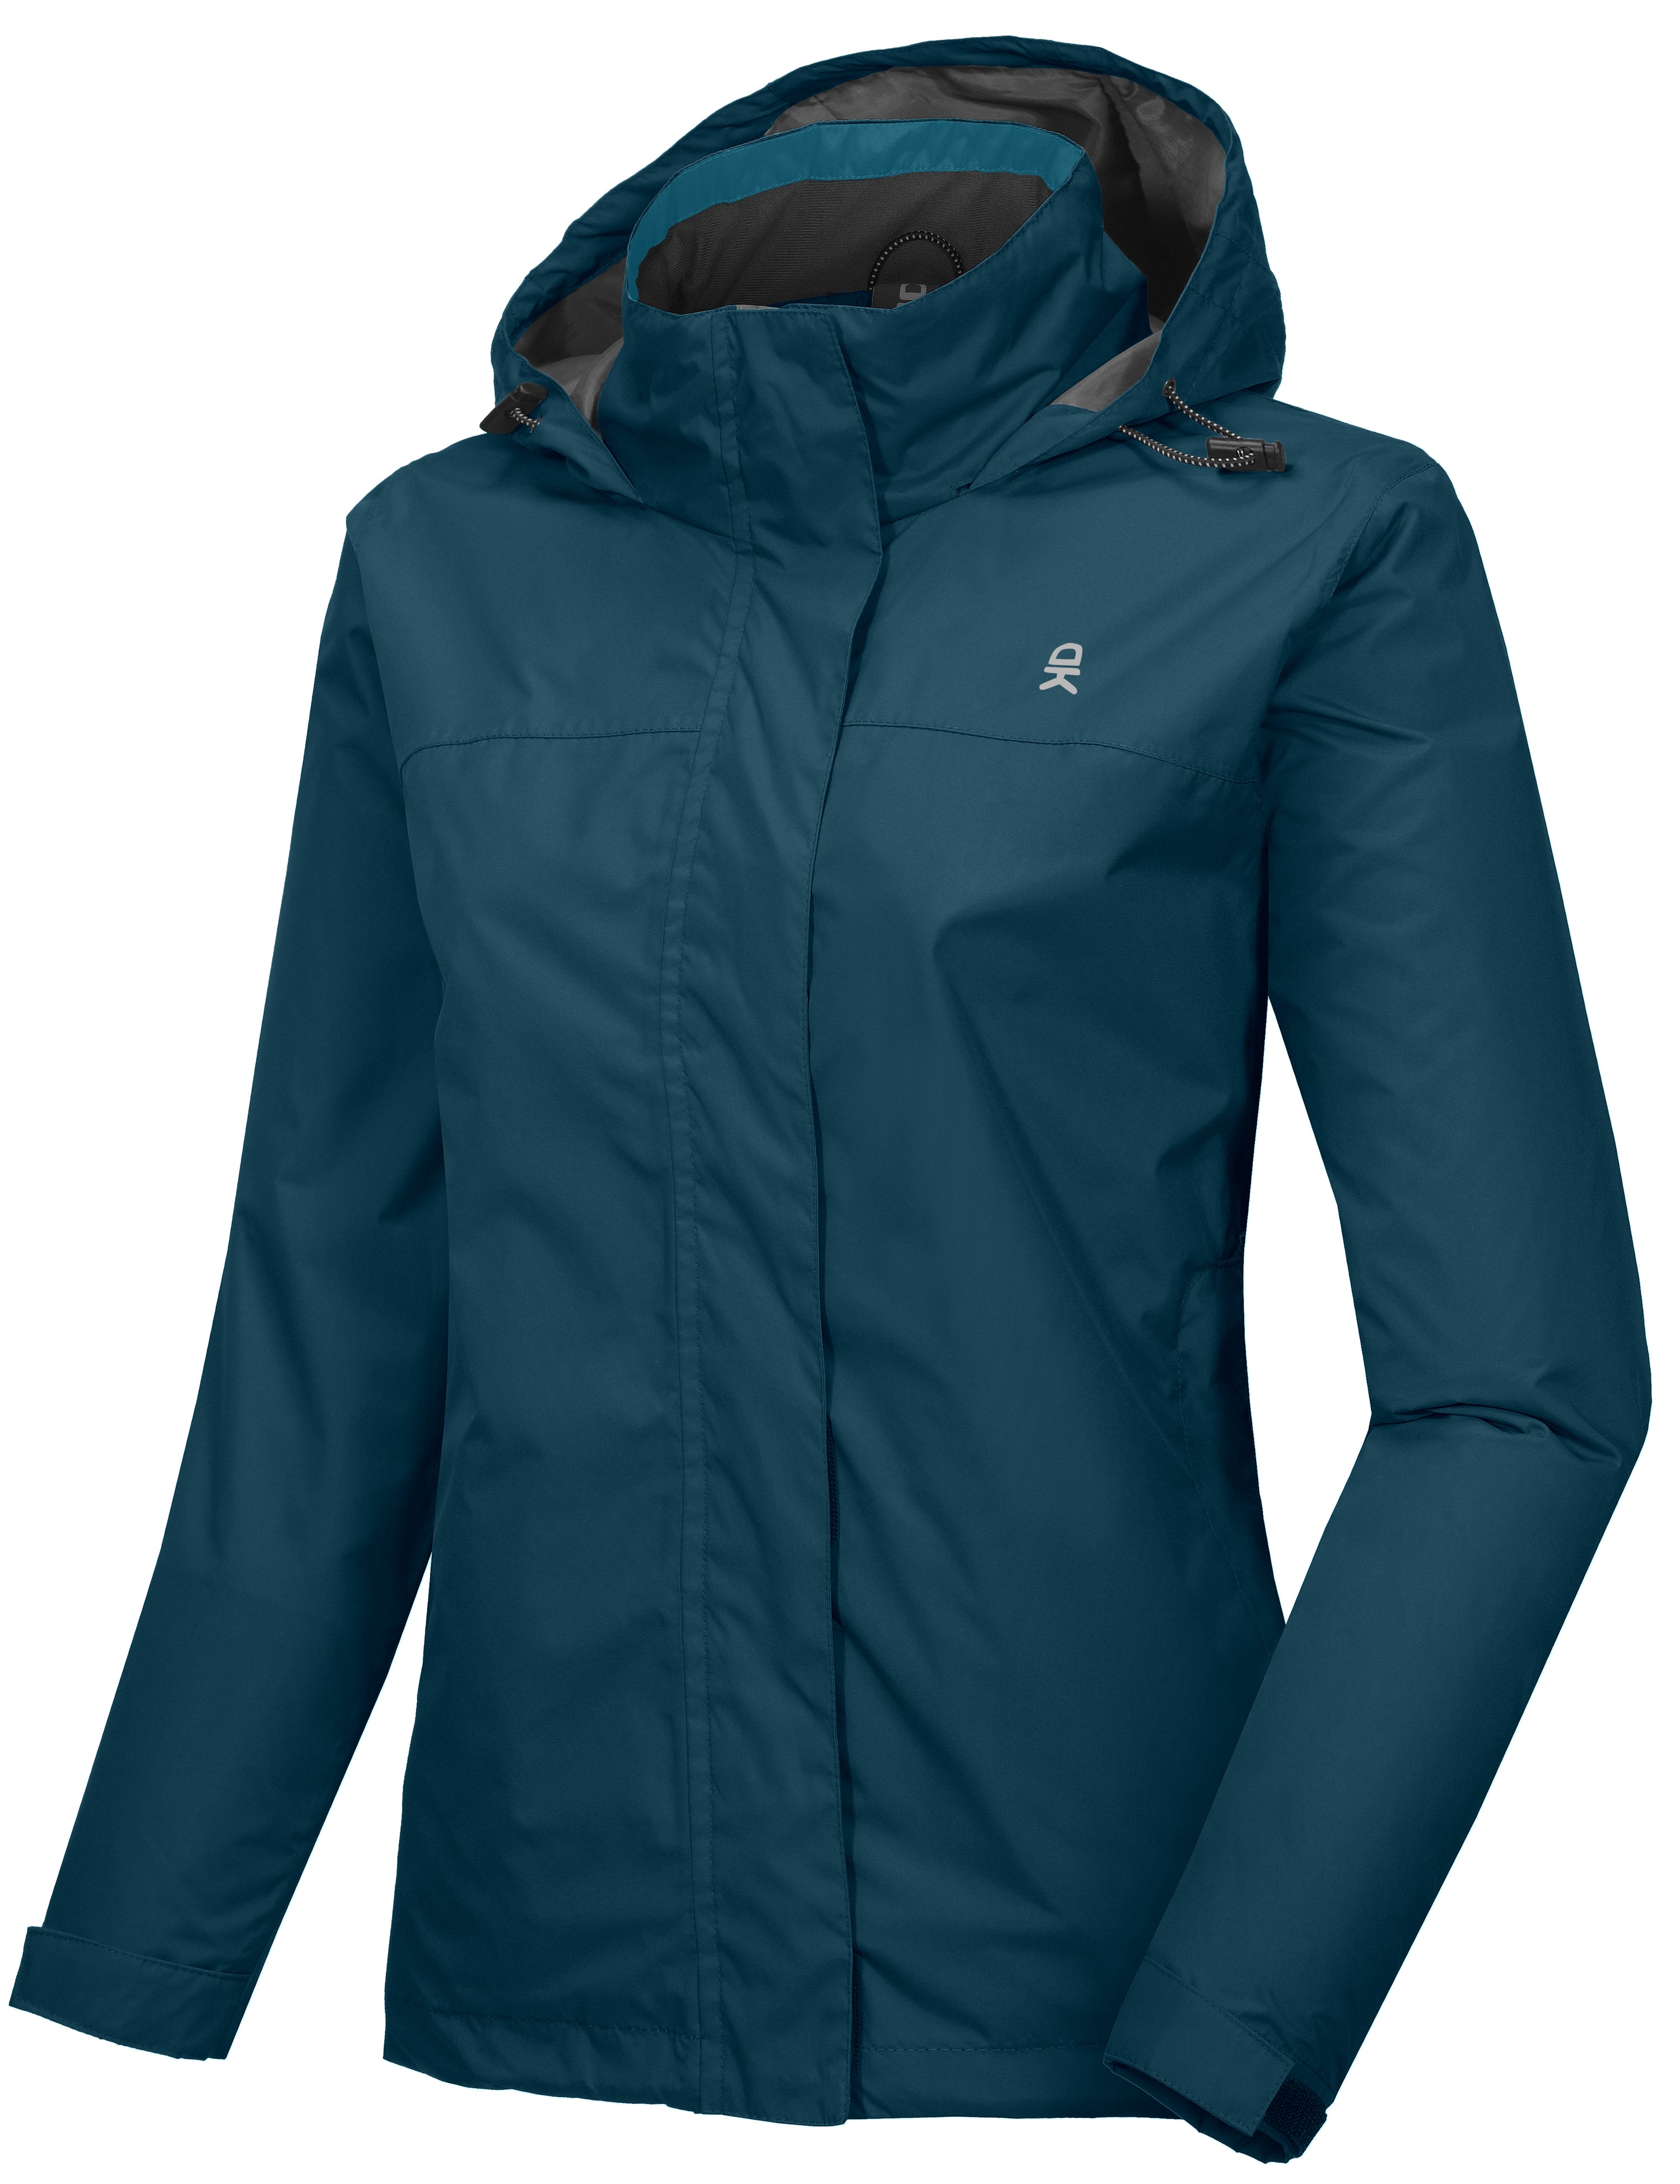 Ultimate Waterproof Rain Jacket (Fleece Lined) 10,000 mm Rated –  Fisherman's Life®